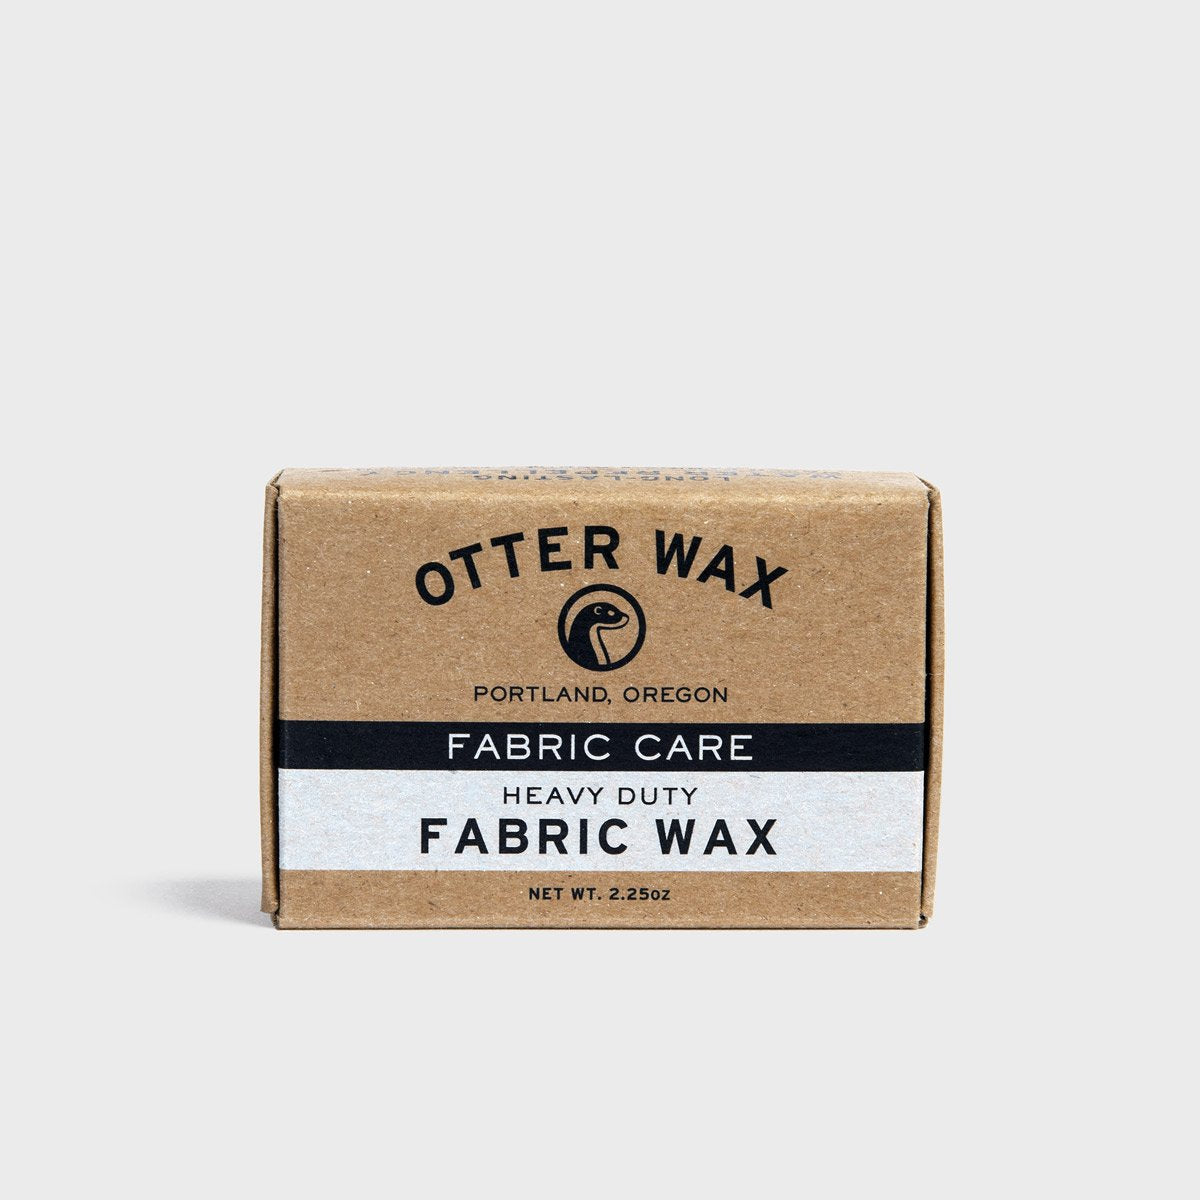 Heavy Duty Fabric Wax Bar - Otterwax